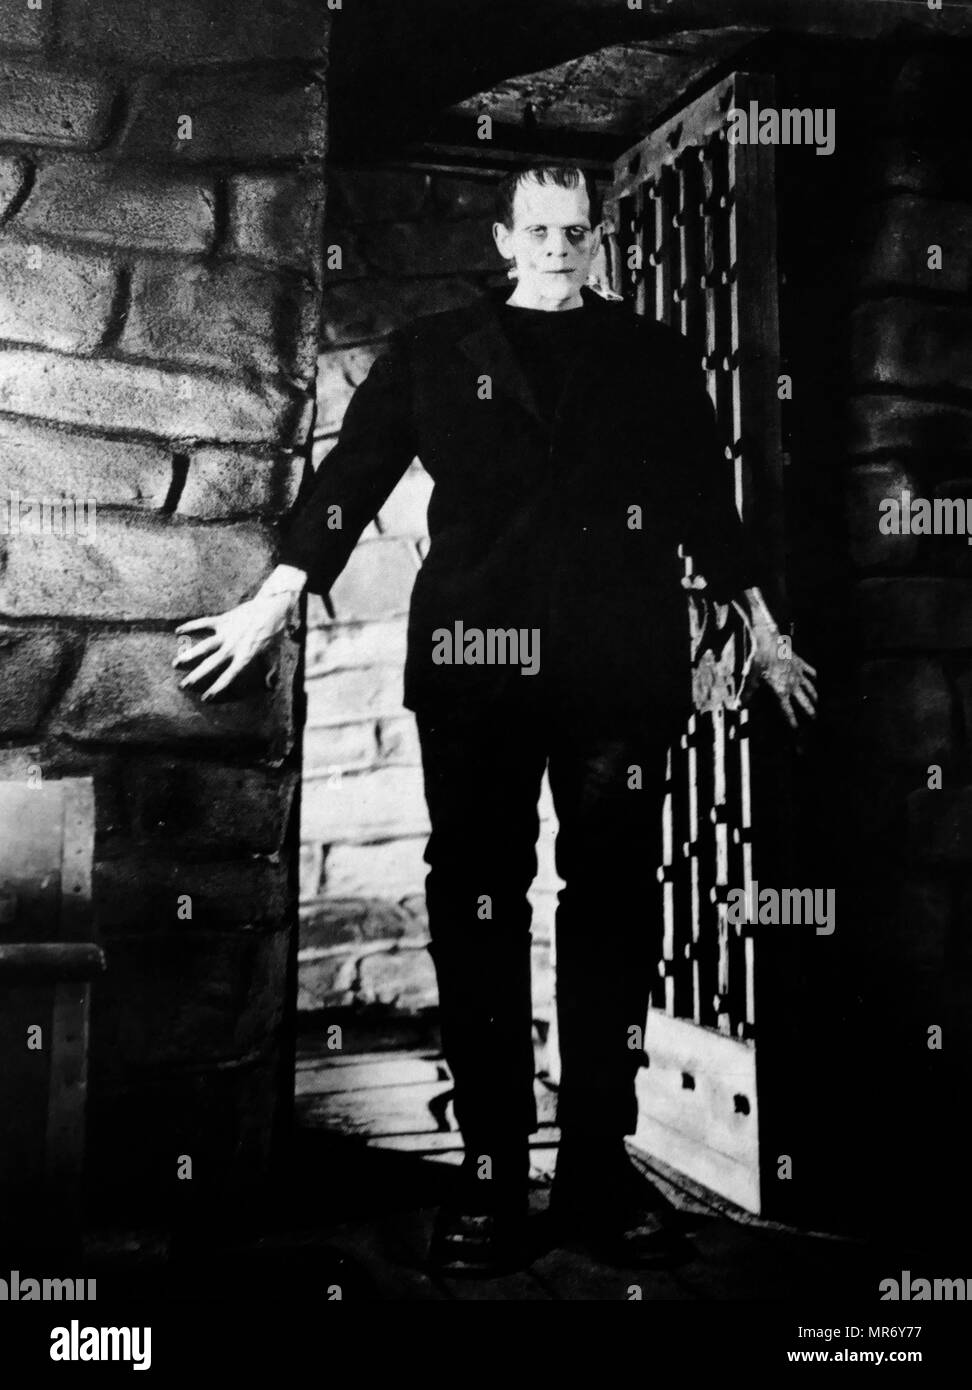 Boris Karloff in Bride of Frankenstein 1935. William Henry Pratt (1887 – 1969), known as Boris Karloff, was an English actor who was primarily known for his roles in horror films. He portrayed Frankenstein's monster in Frankenstein (1931), Bride of Frankenstein (1935), and Son of Frankenstein (1939). Stock Photo